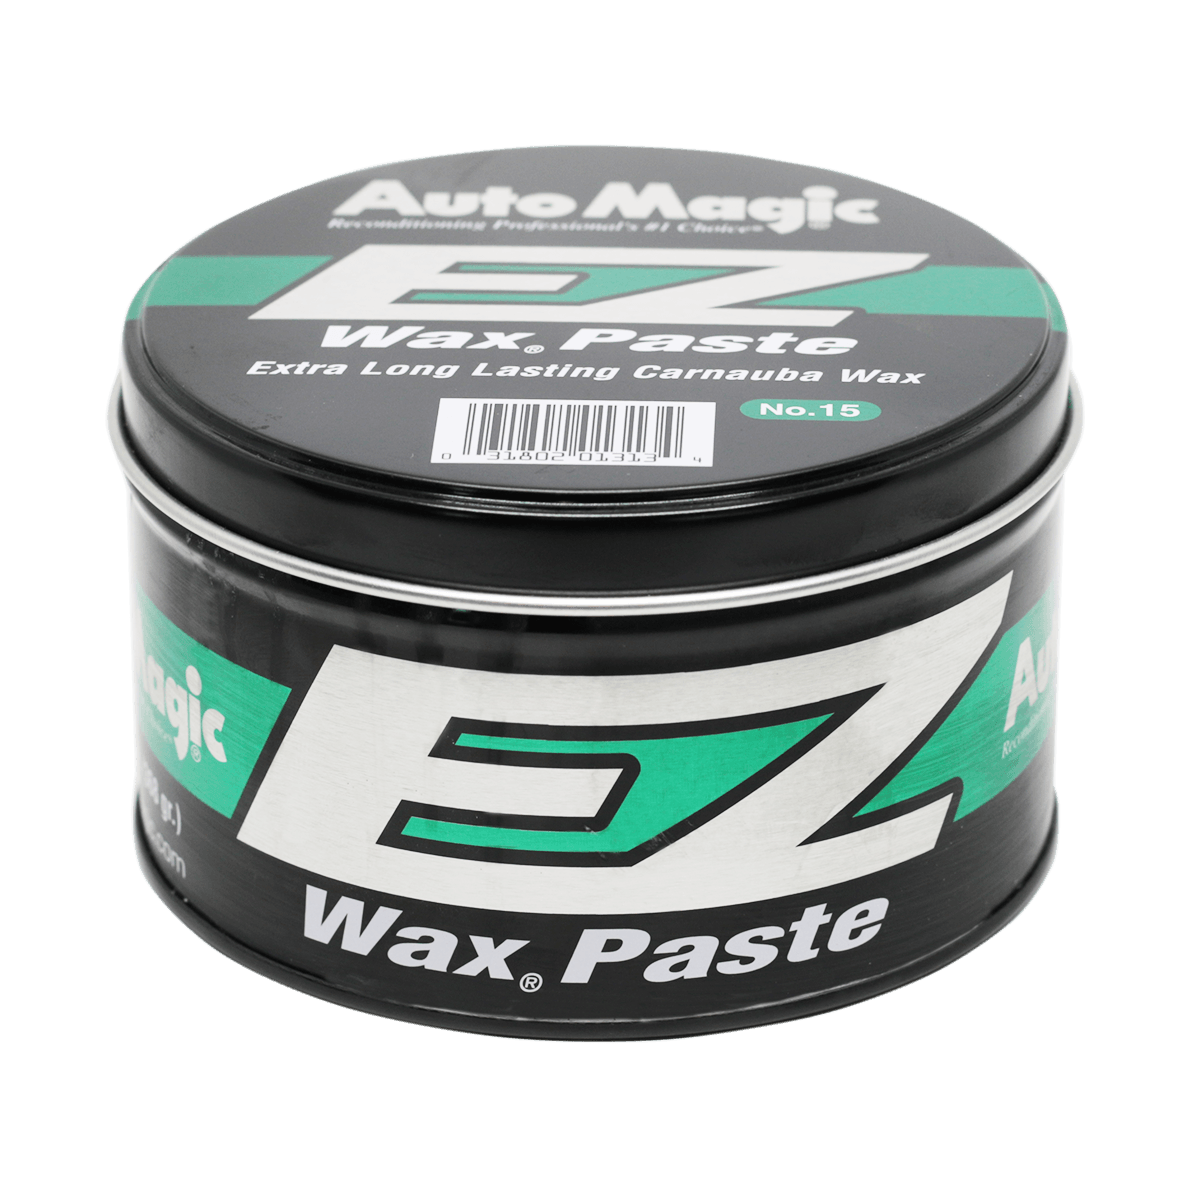 Auto Magic EZ-Wax Paste - Xpert Cleaning